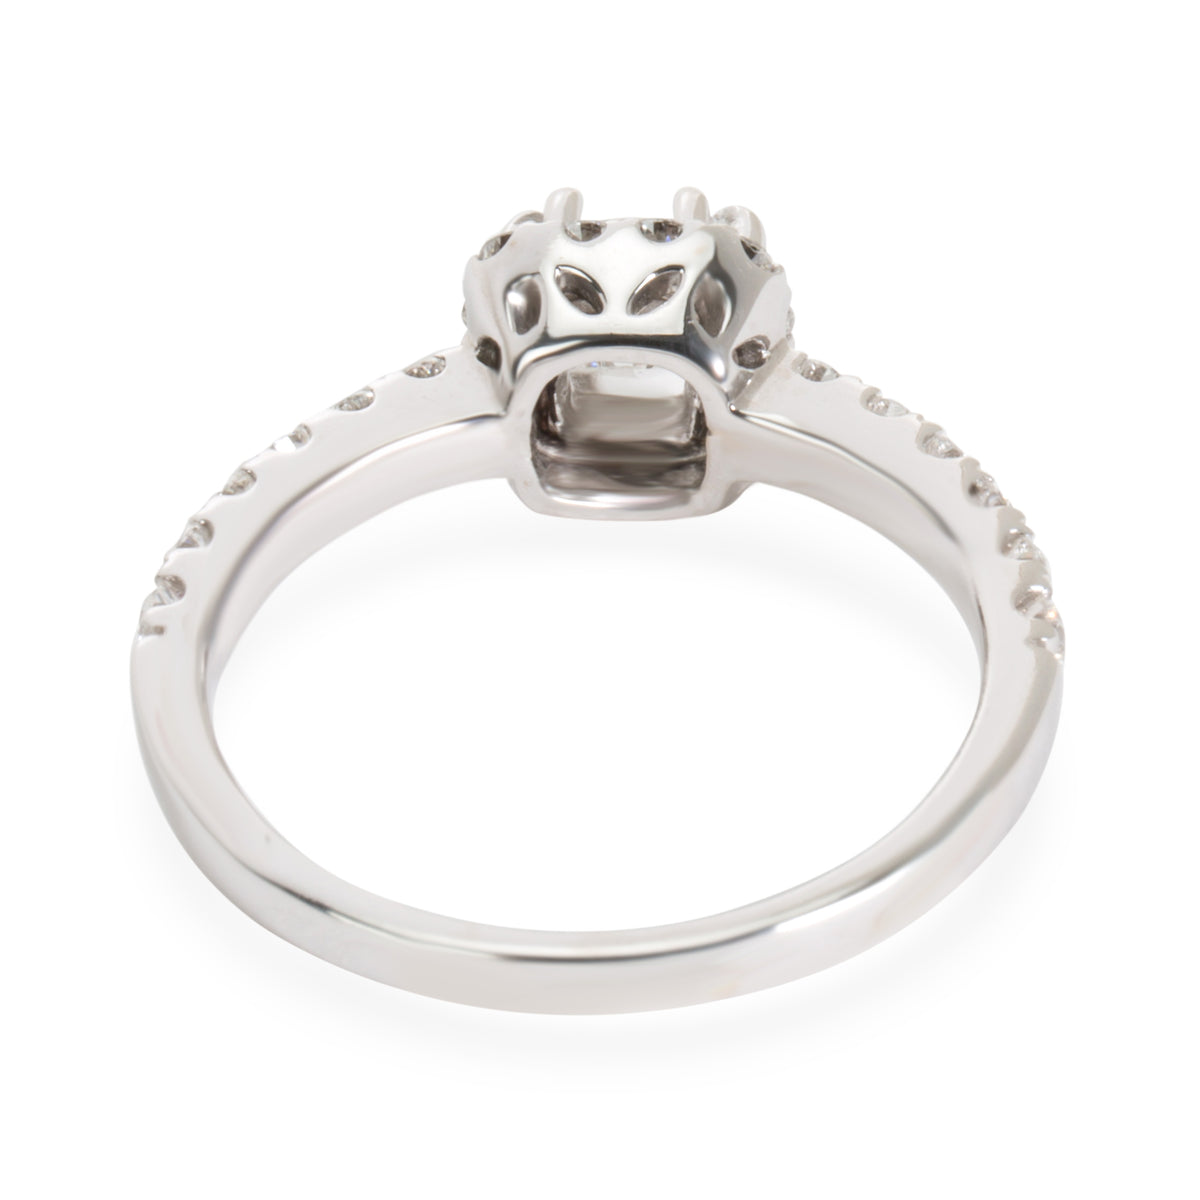 Halo Princess Diamond Engagement Ring in 18k White Gold 1.22 CTW